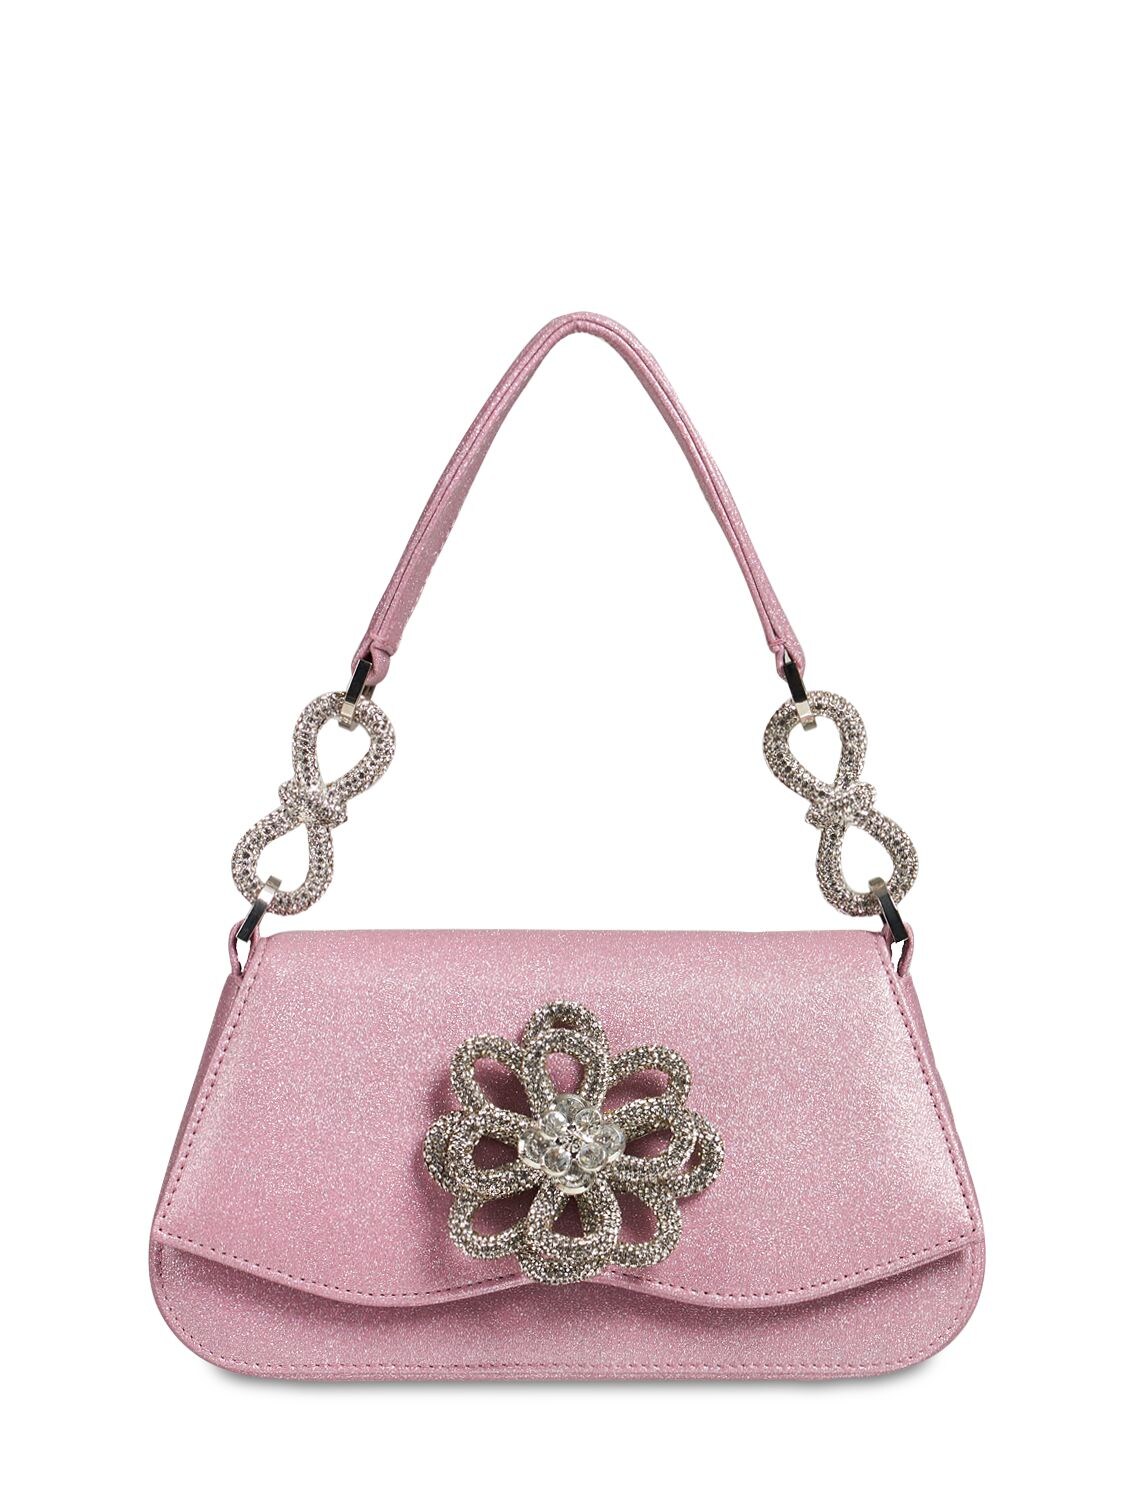 MACH & MACH Md Carrie Flower Glitter Top Handle Bag